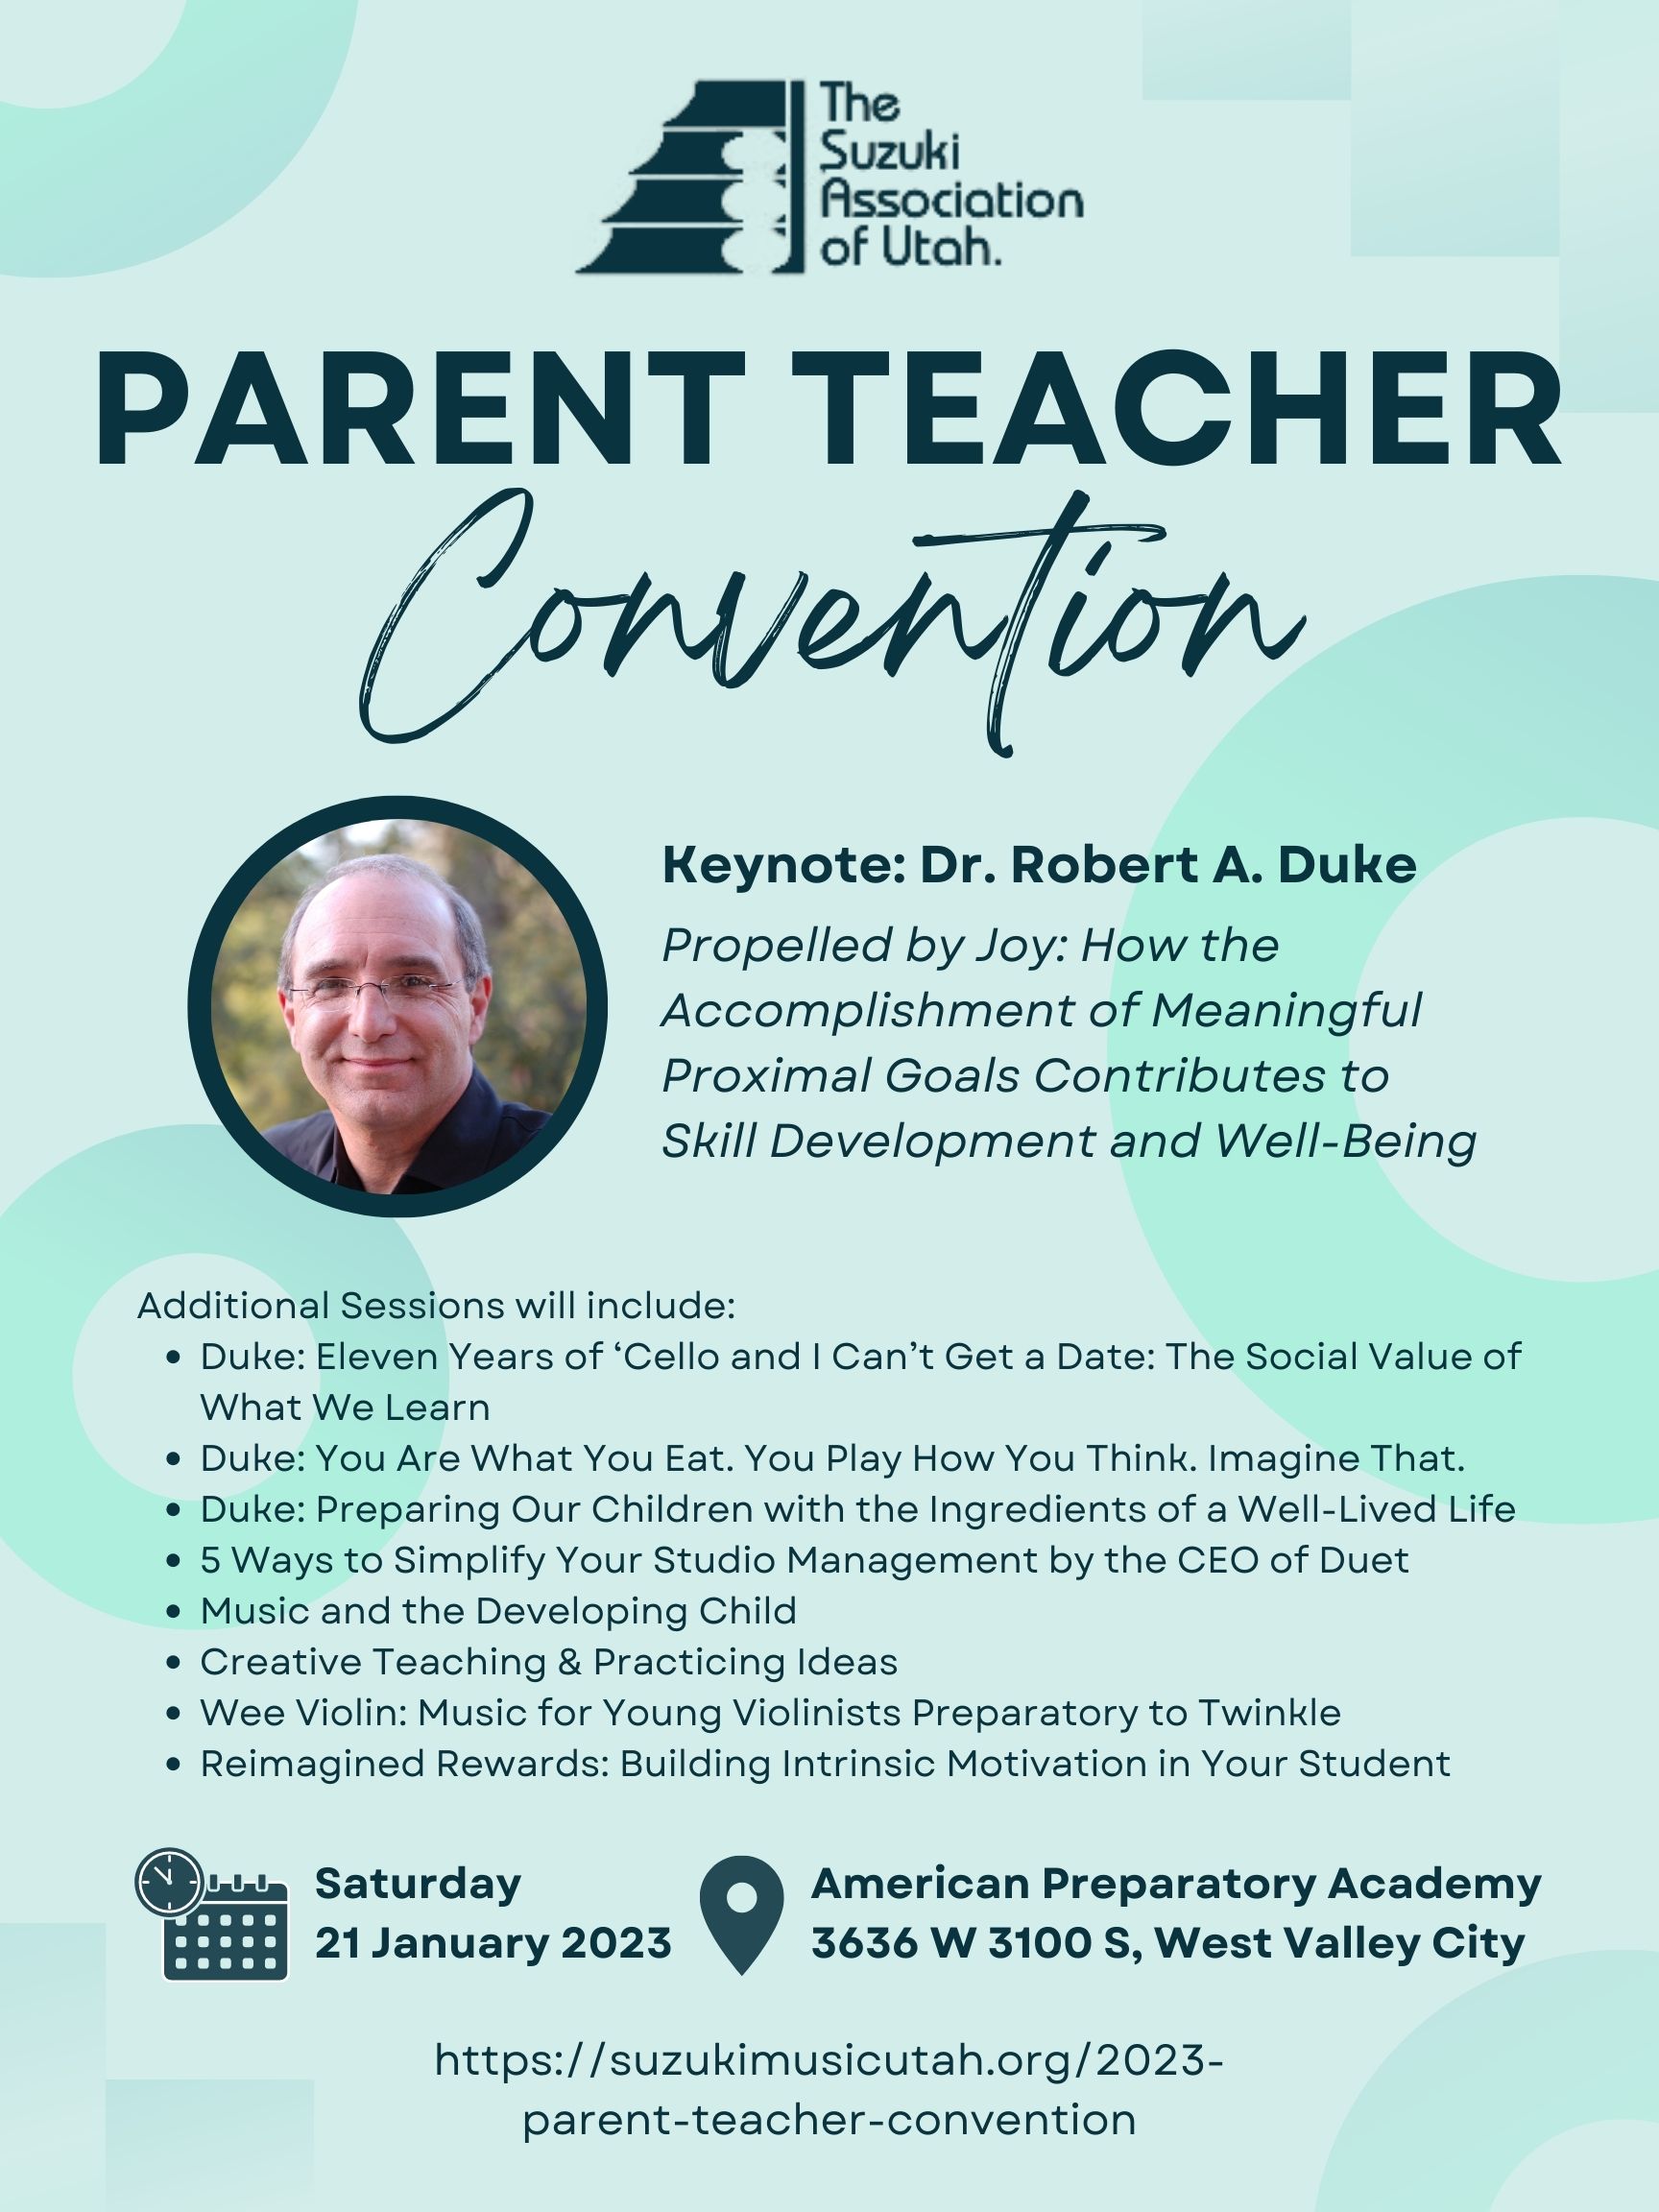 Registration is Open for the 2023 Parent Teacher Convention!